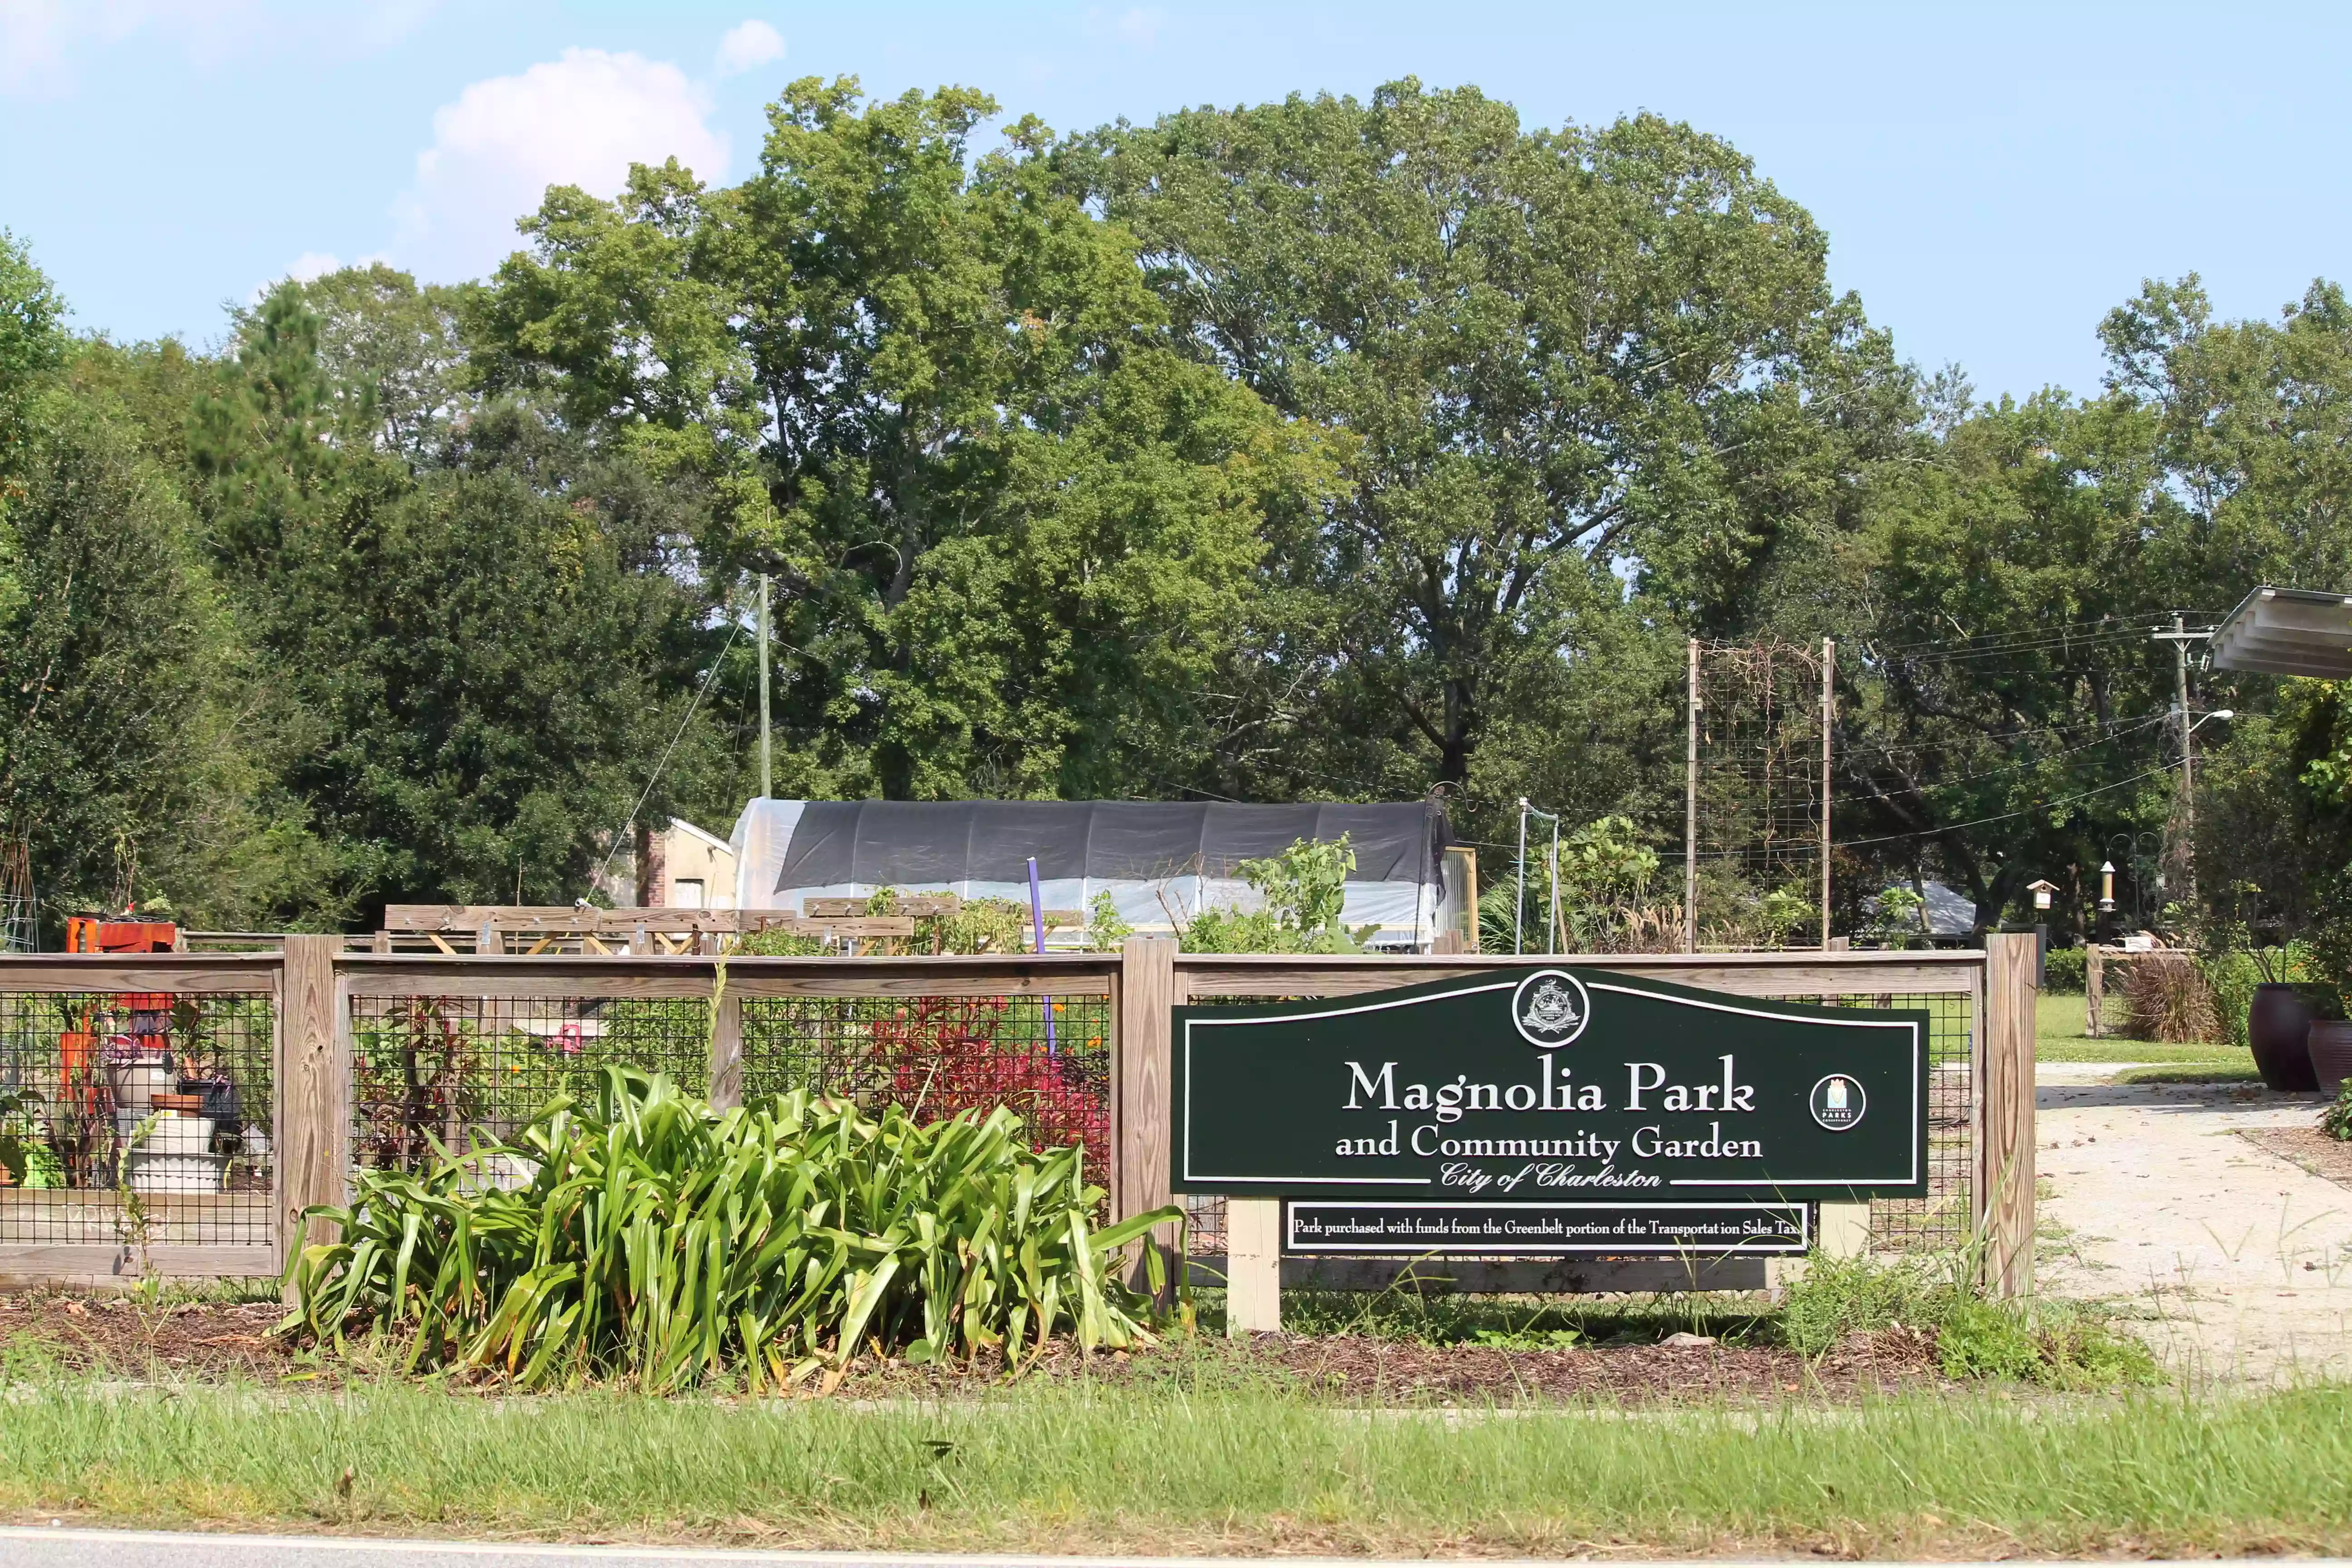 Magnolia Park and Community Garden